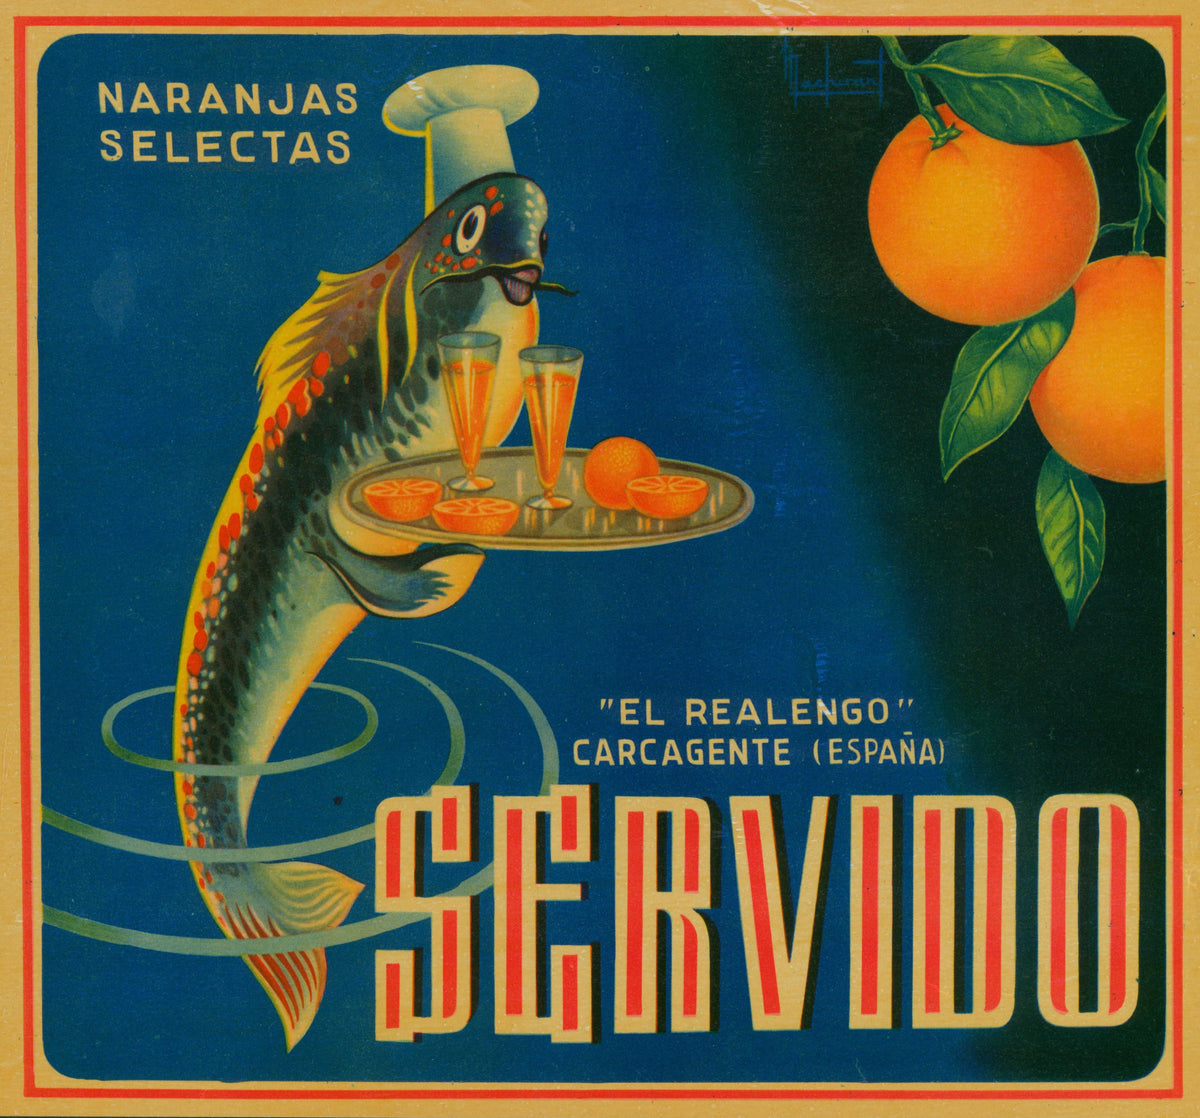 Servido- Spanish Crate Label - Authentic Vintage Antique Print